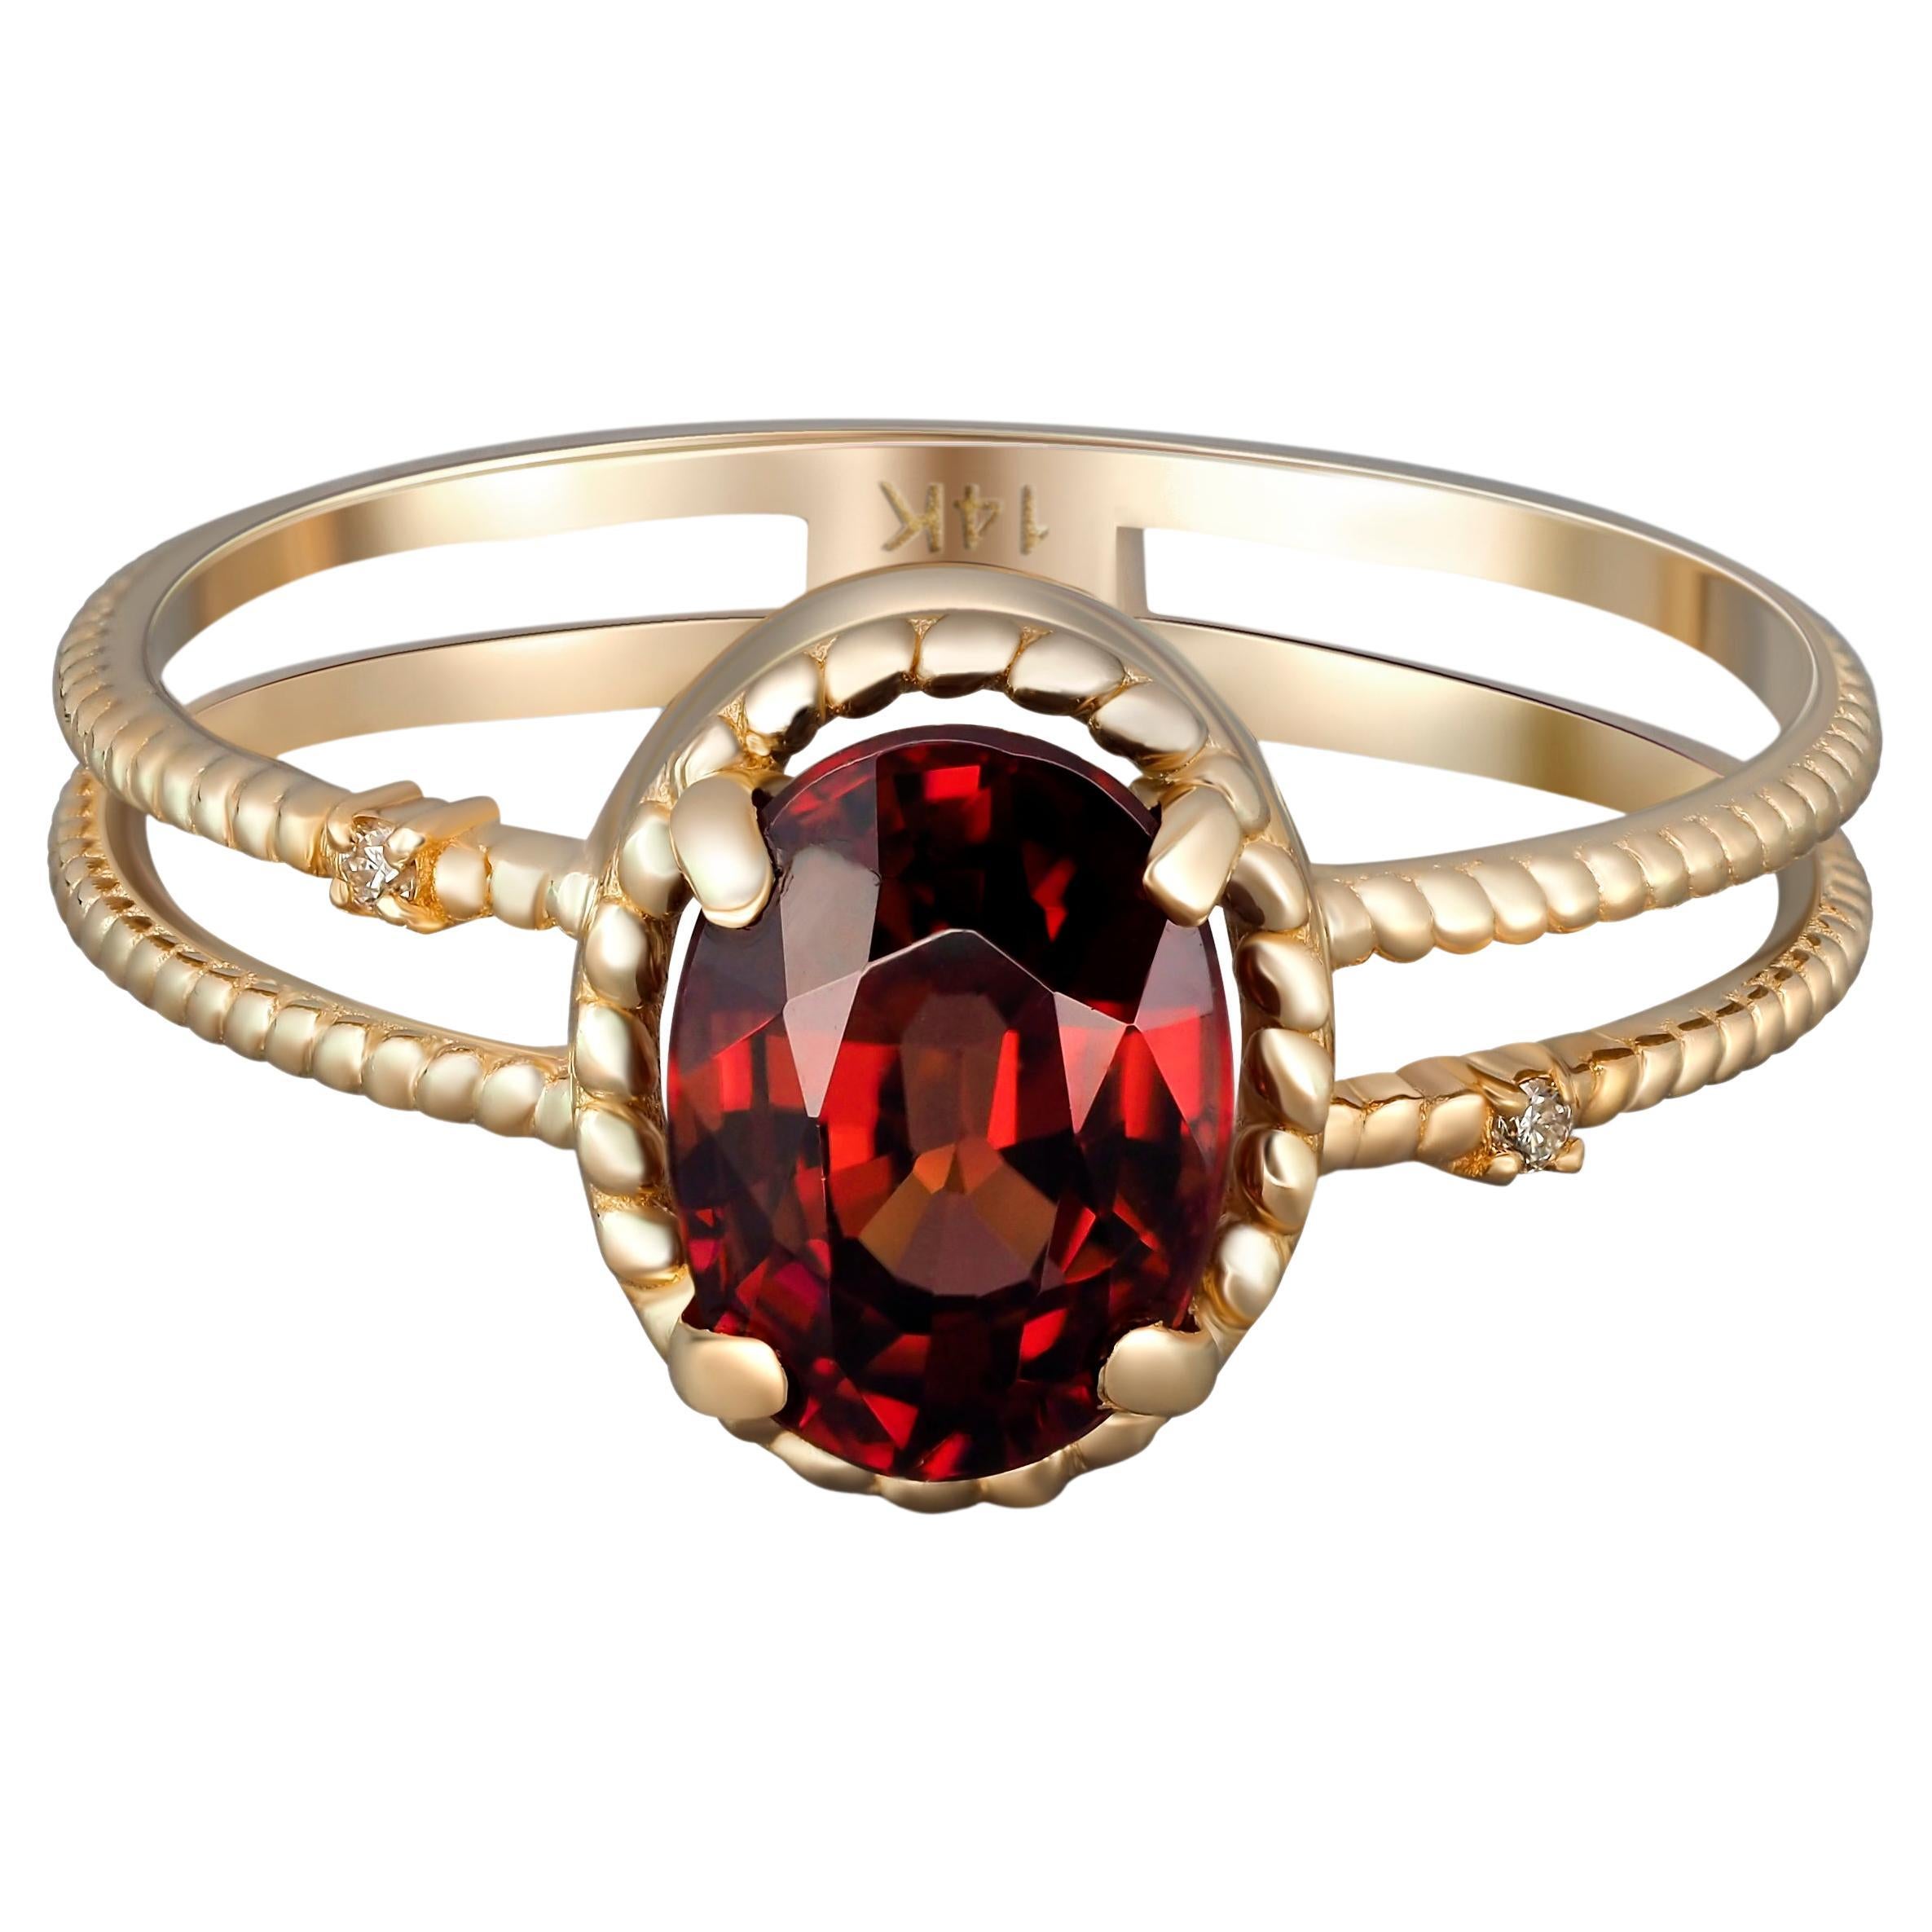  Oval Garnet Ring in 14k gold For Sale